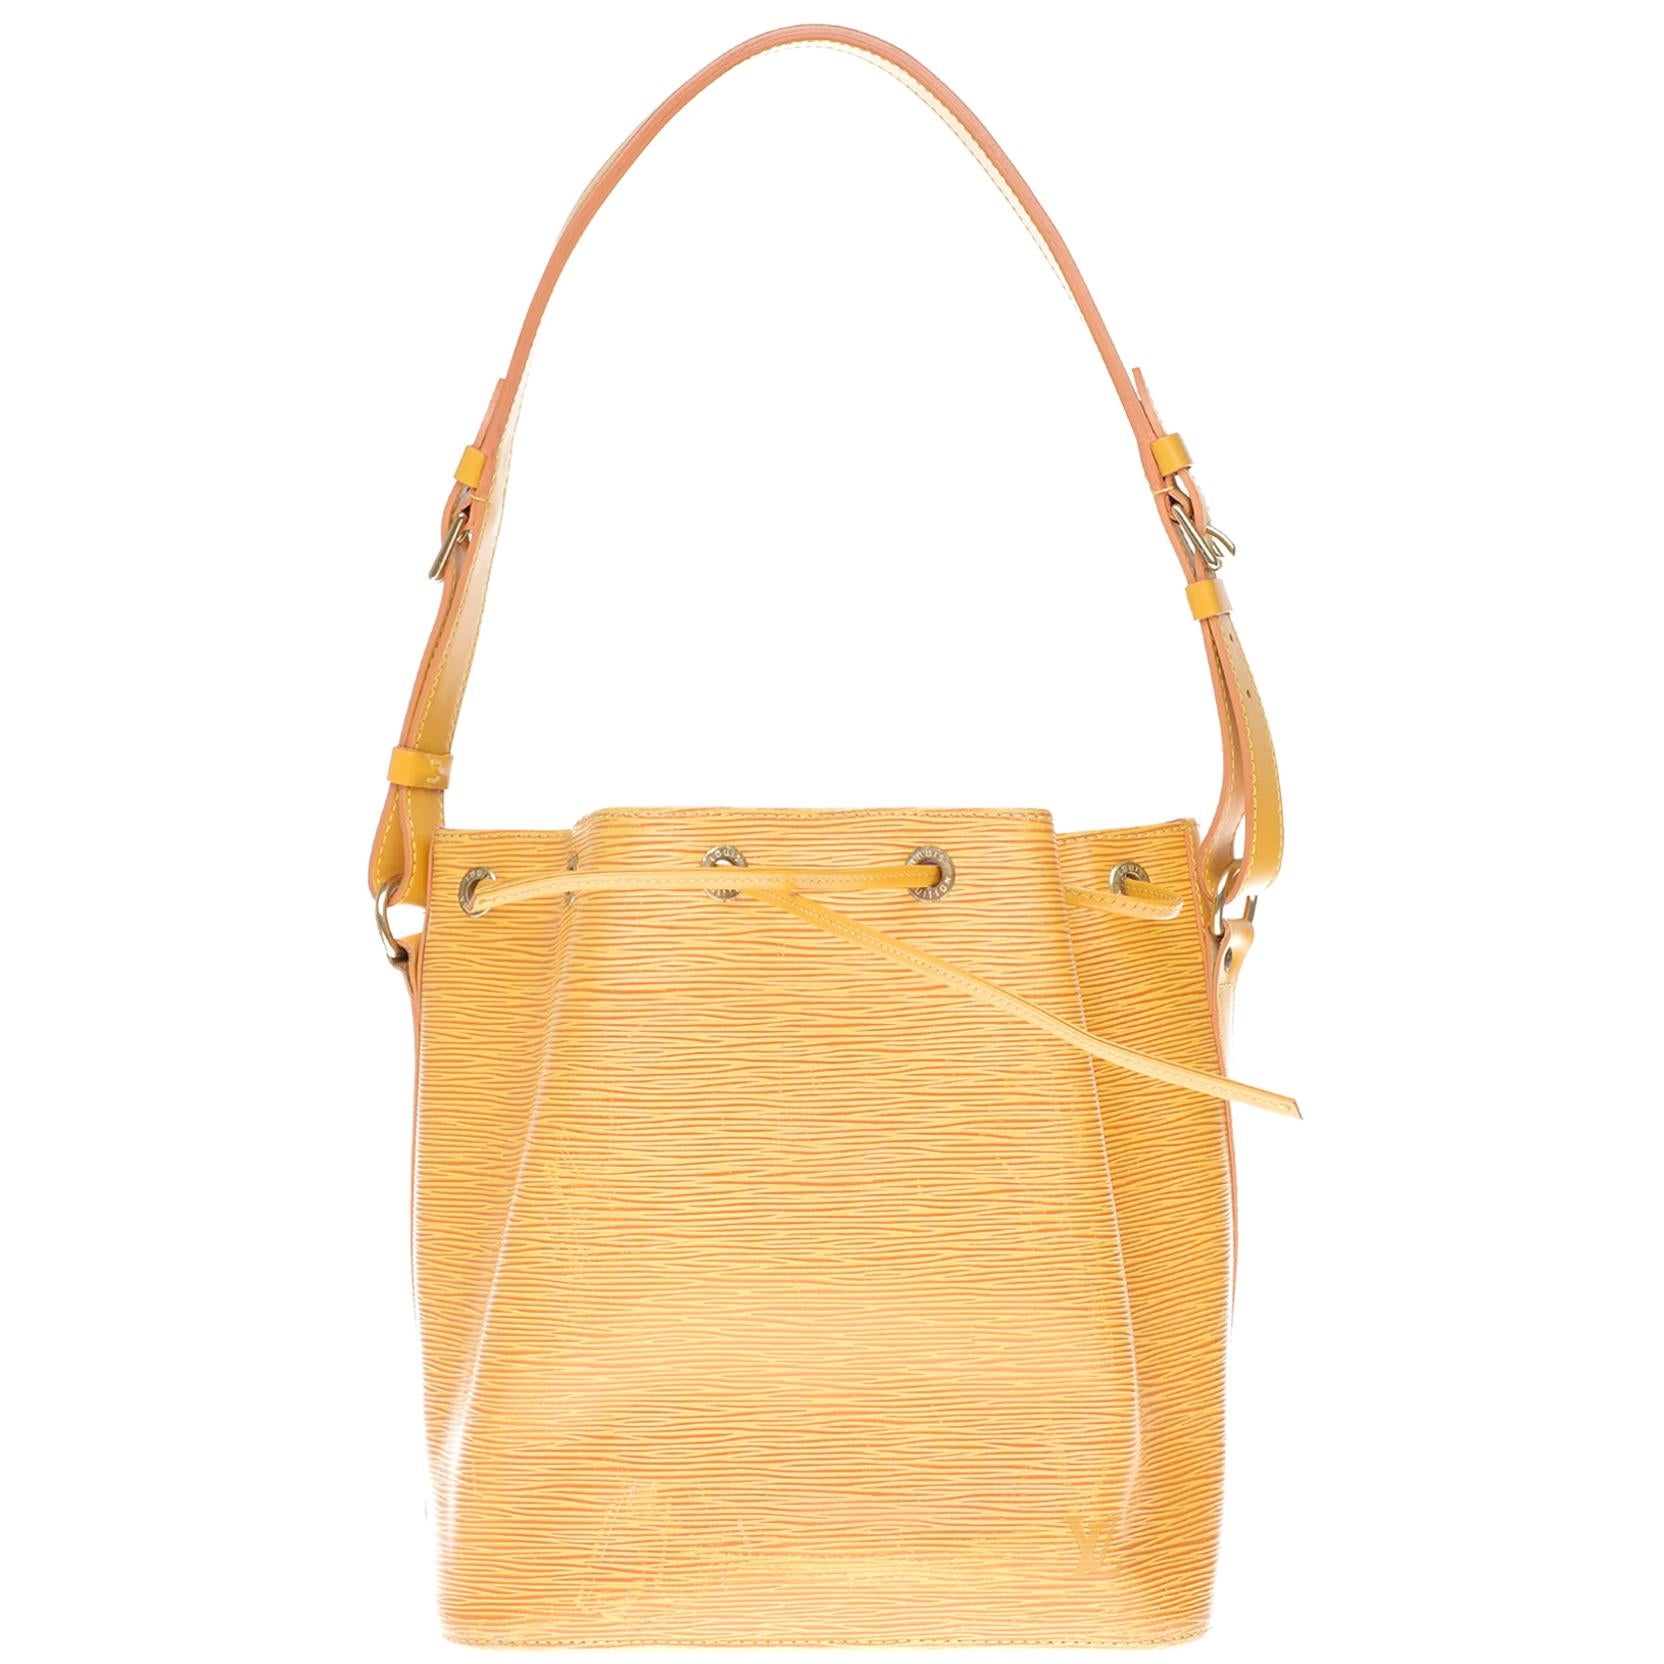 Louis Vuitton Noé PM shoulder bag in yellow epi leather, gold hardware